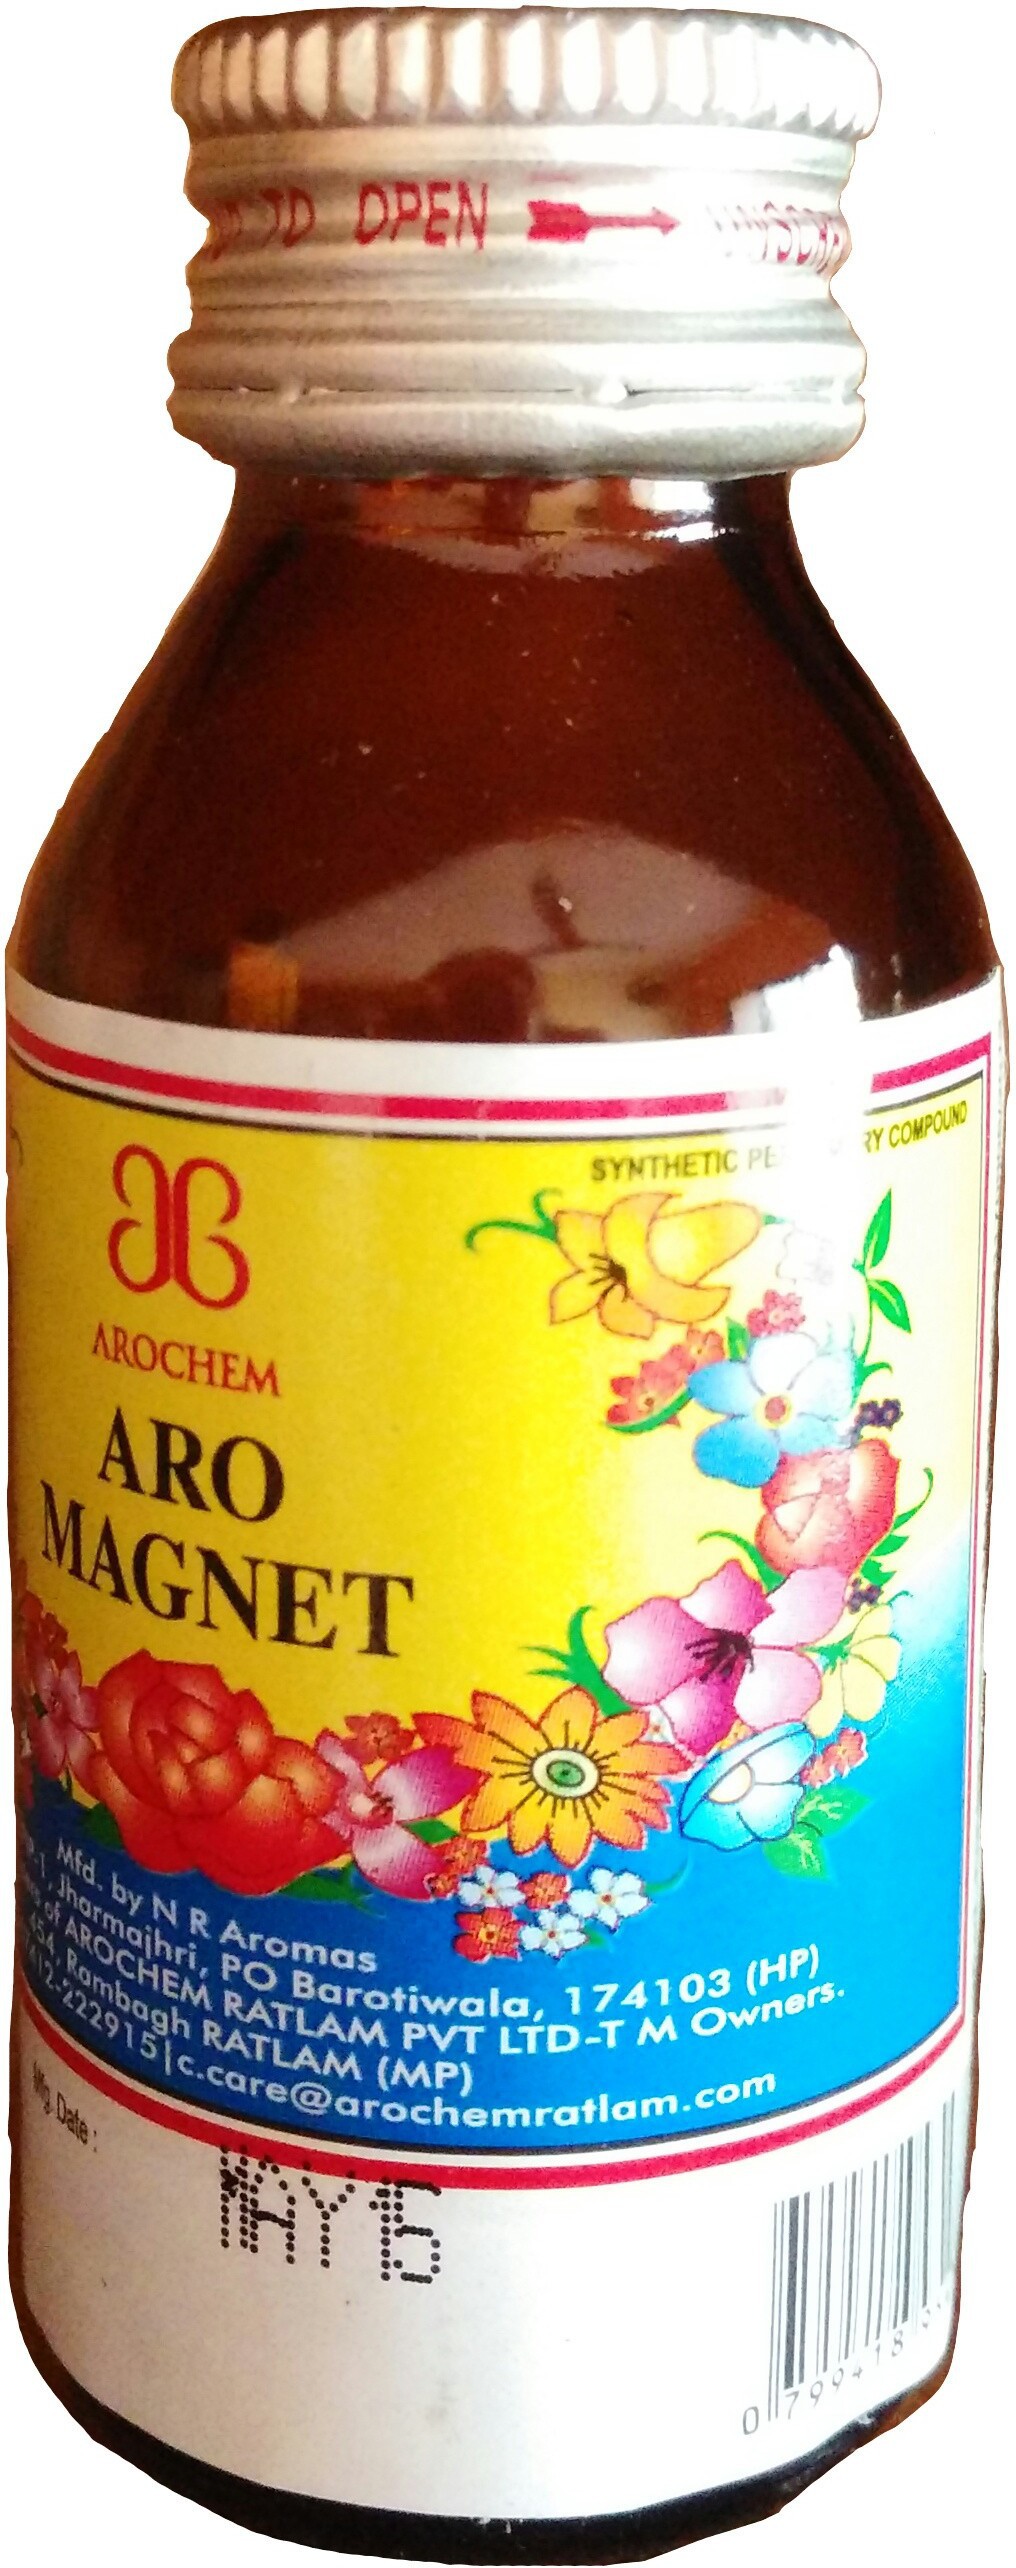 Arochem Aro Magnet Herbal Attar(Musk Arabia)